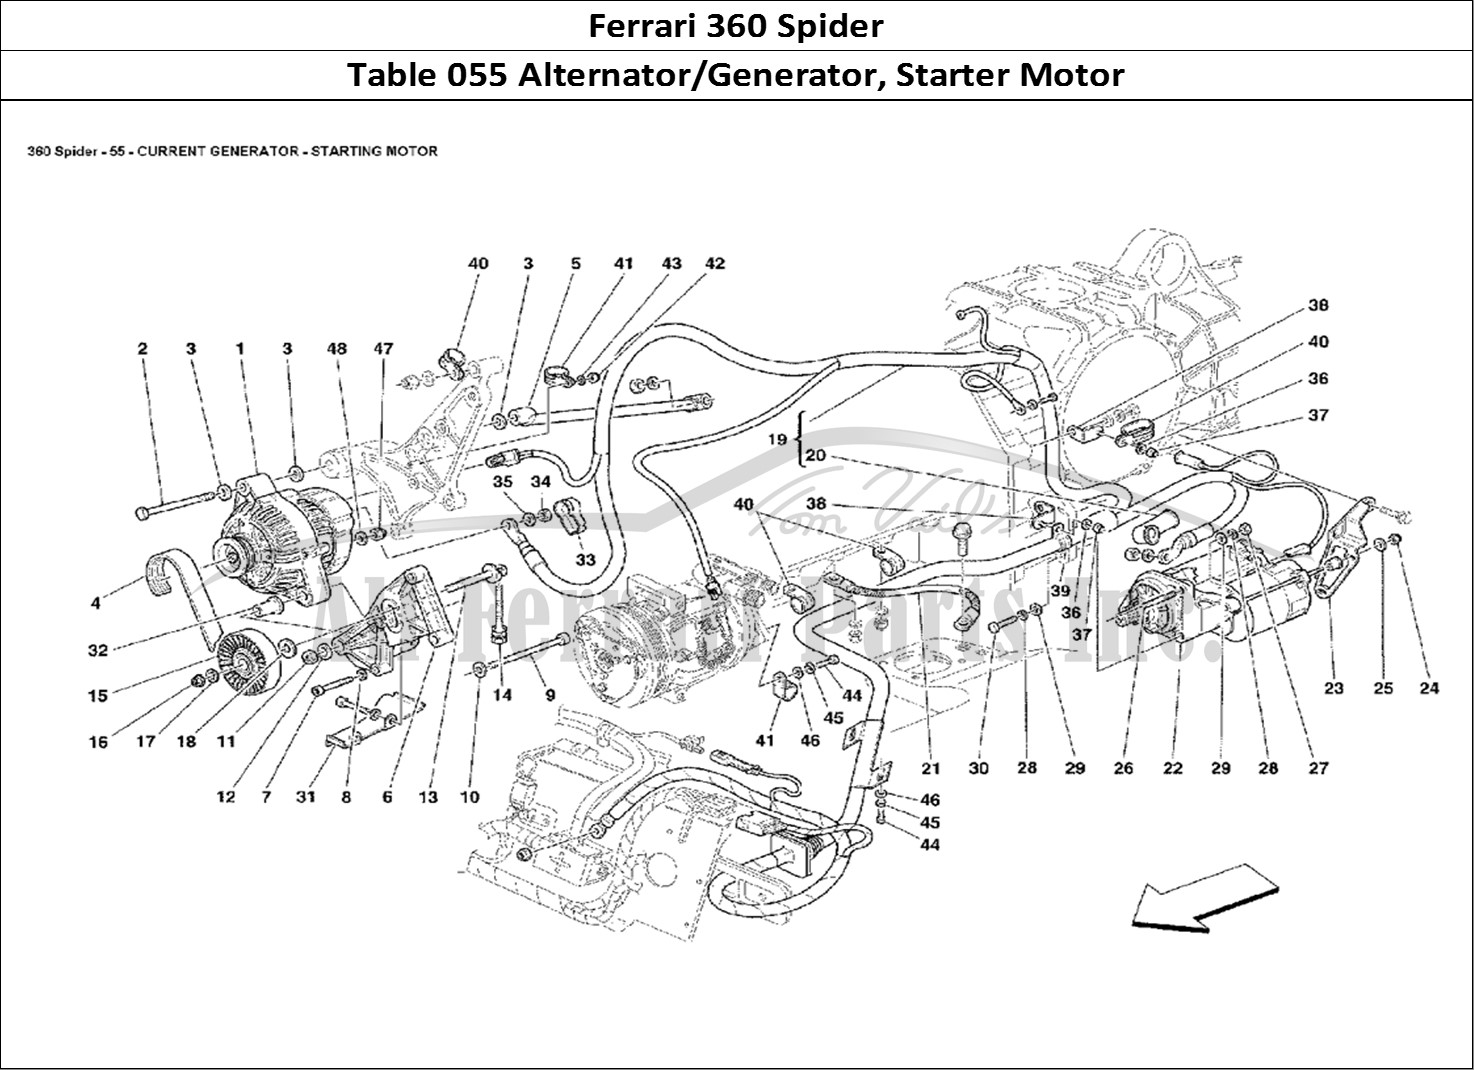 Ferrari Parts Ferrari 360 Spider Page 055 Current Generator - Start